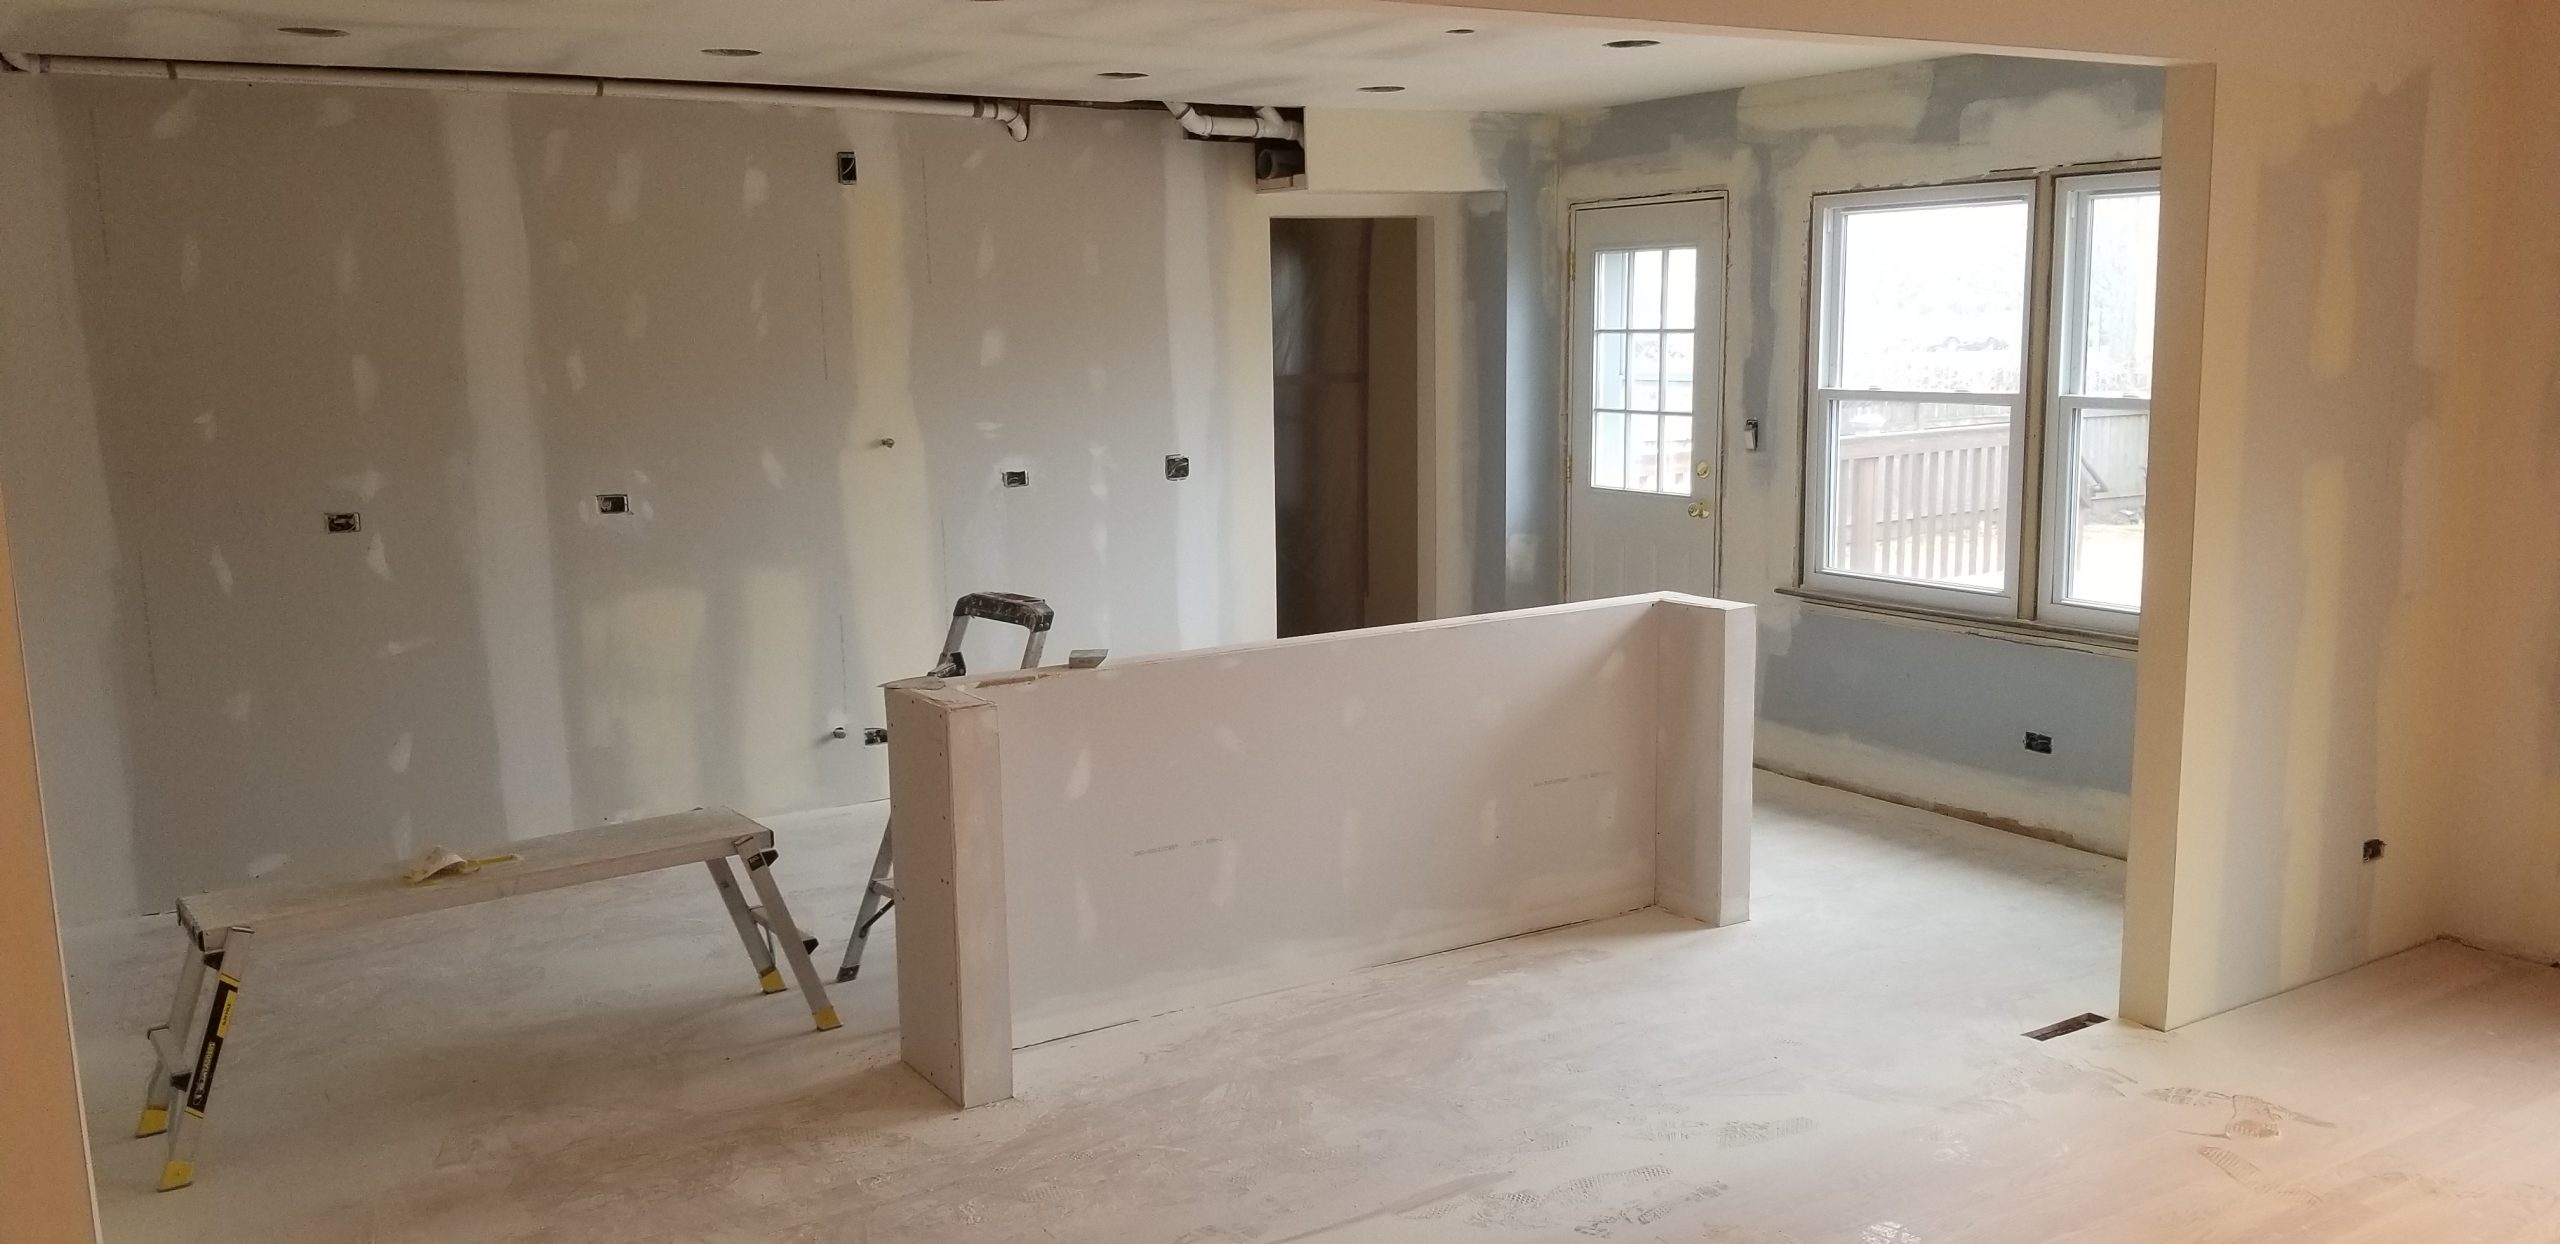 In Progress | Mount Prospect, IL First Floor Renovation